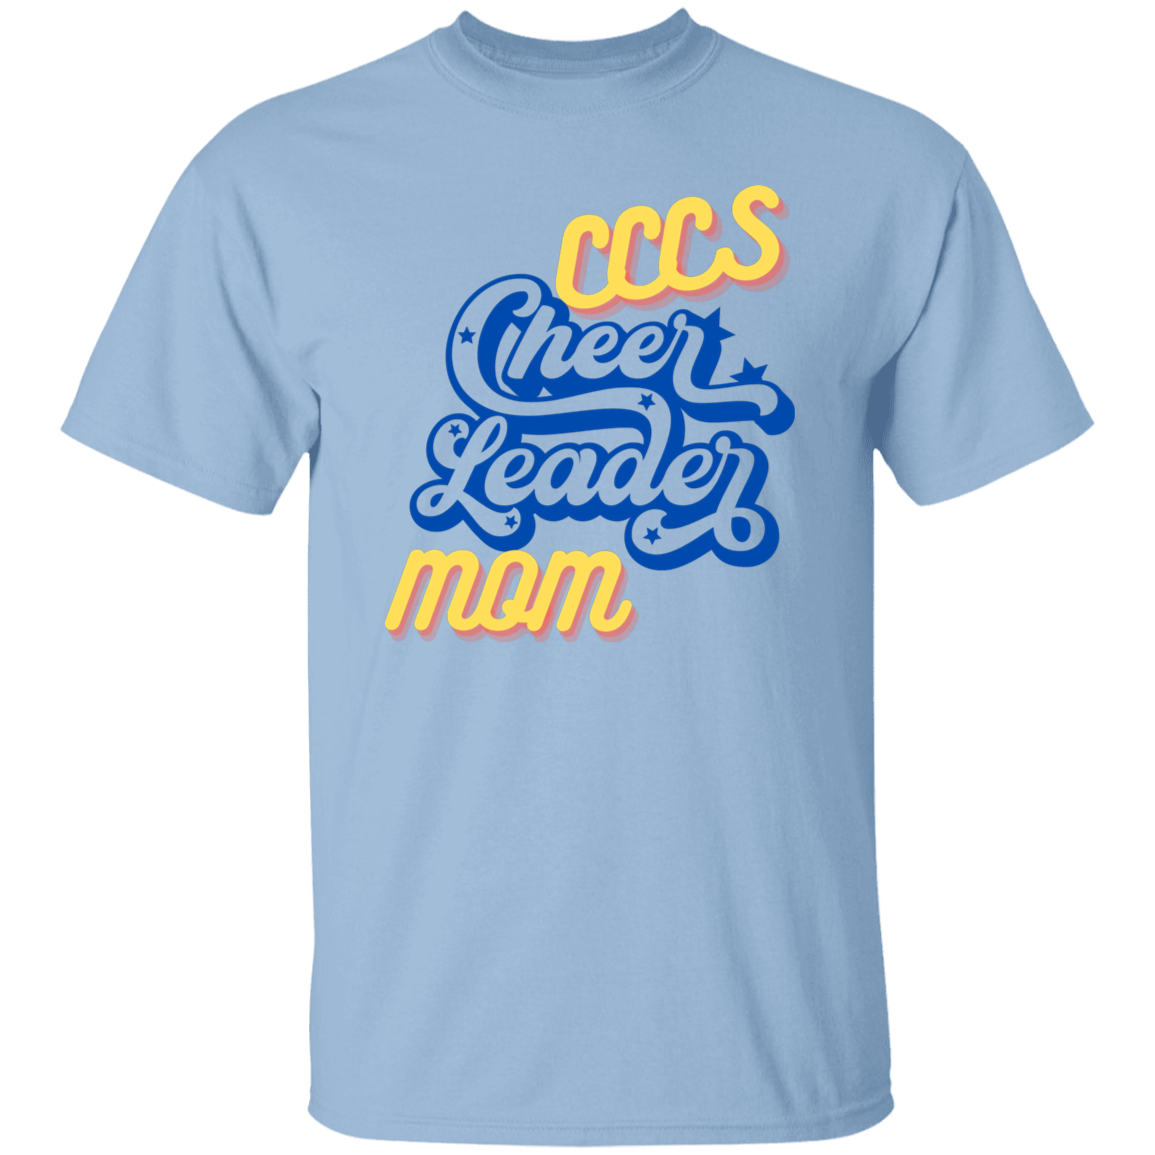 CCCS Cheer Mom Adult T-Shirt